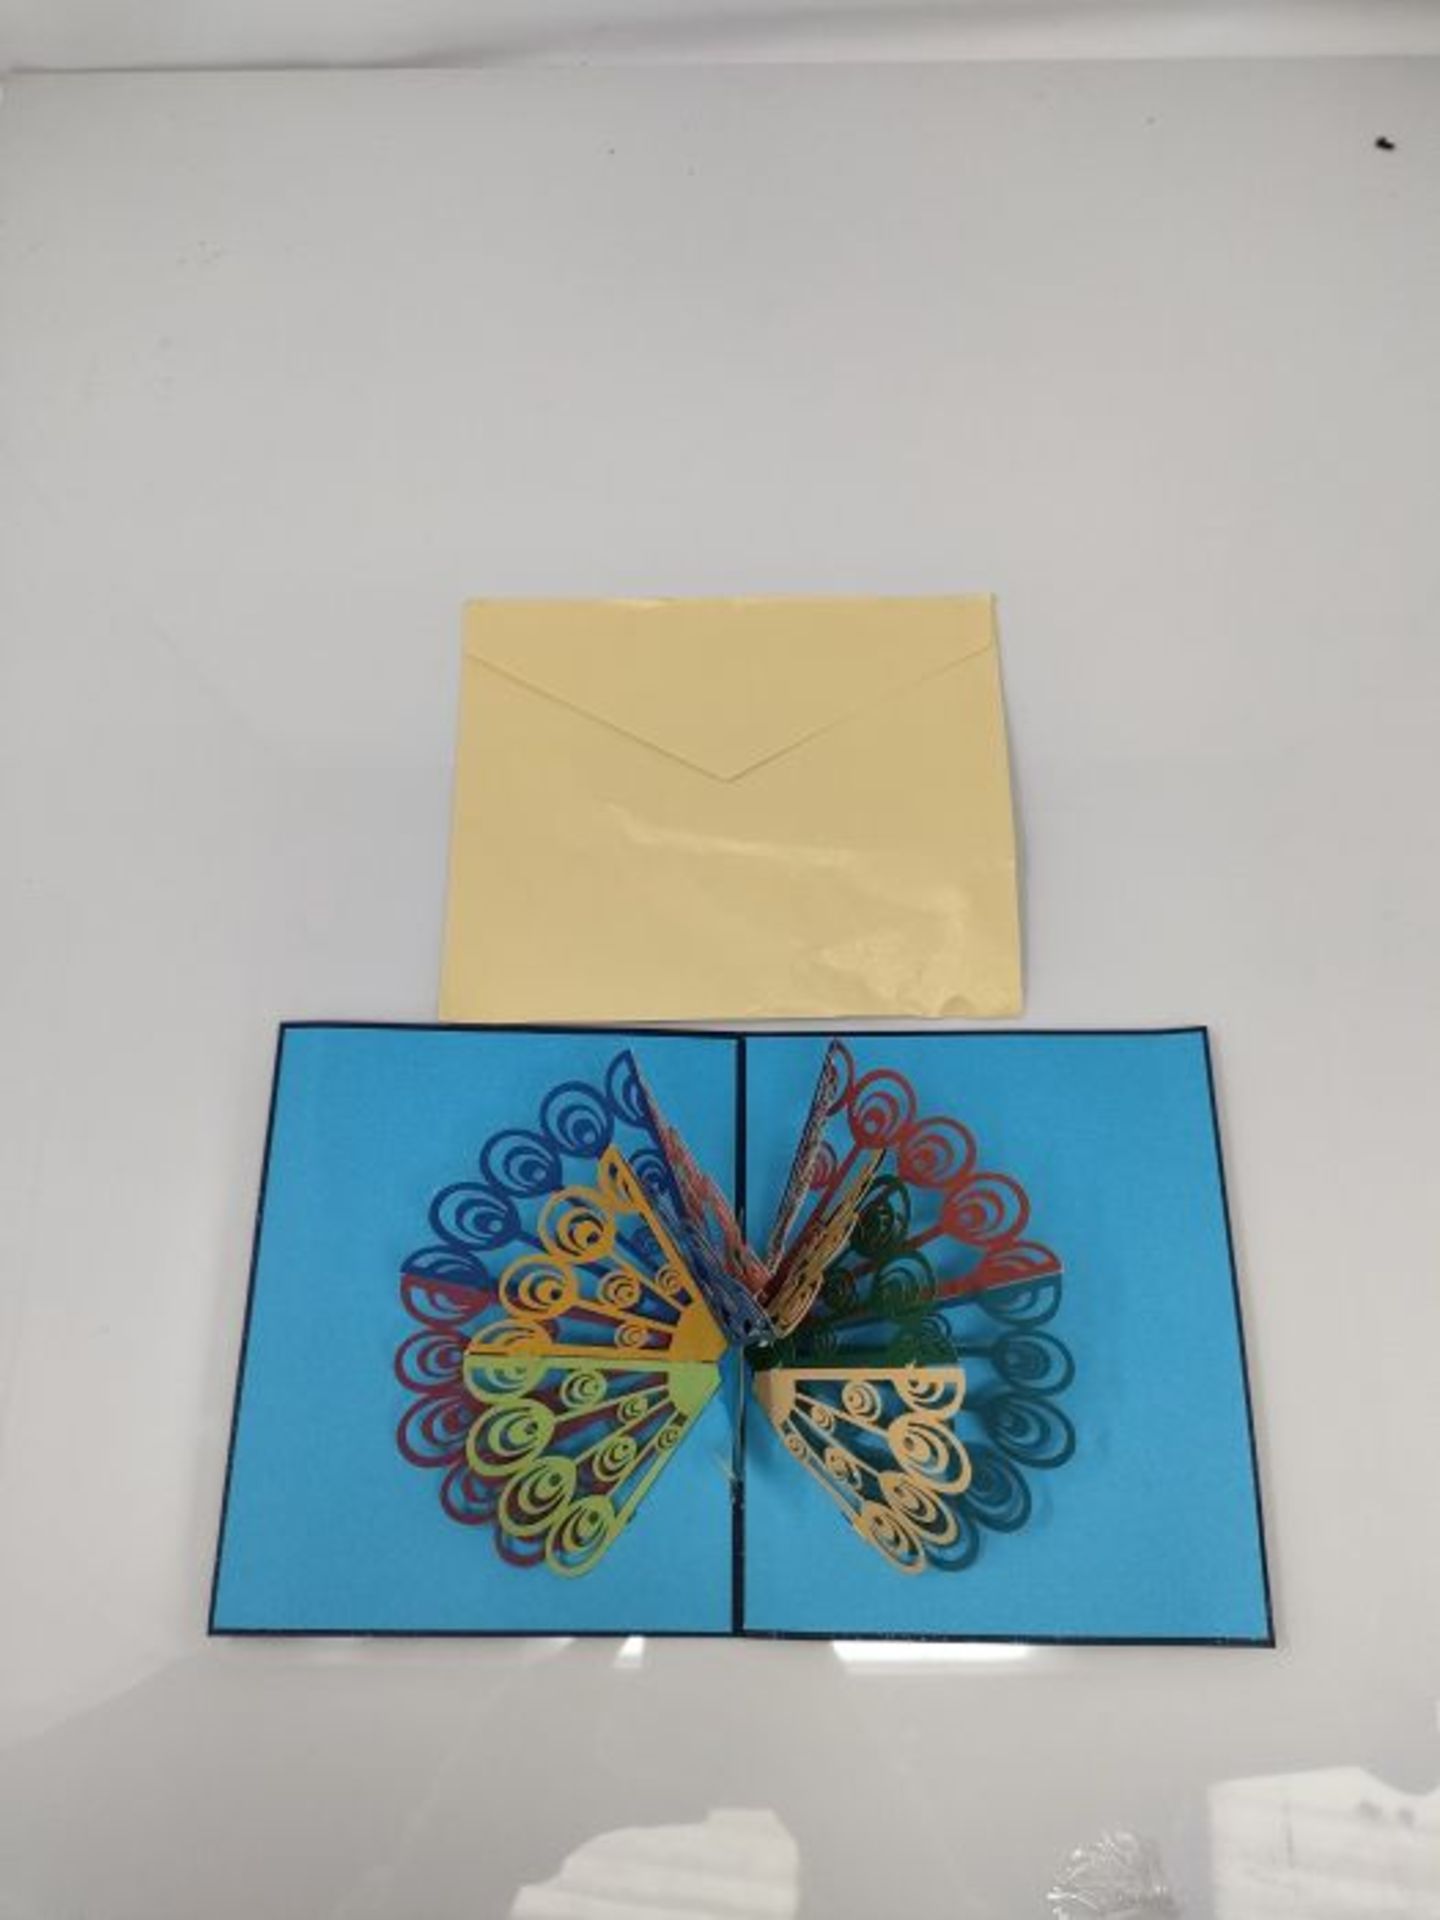 SJUNJIE 3D Pop-up Peacock Greeting Cards Handmade Cards for Birthday Wedding Invitatio - Image 3 of 3